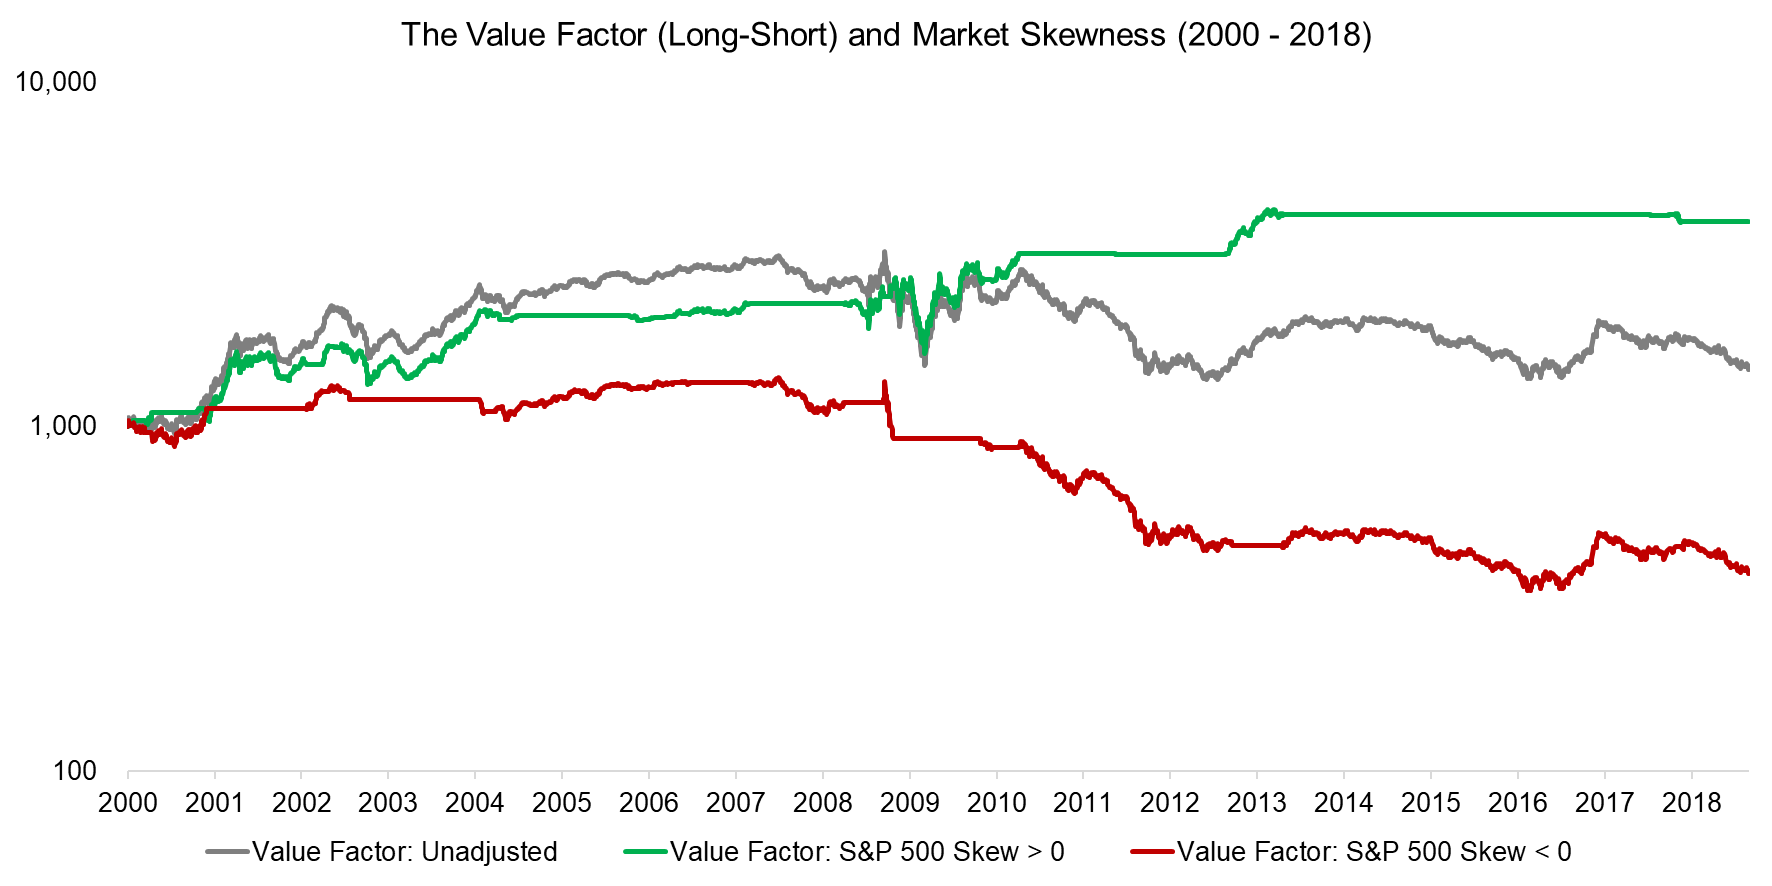 Value Factor (Long-Short) and Market Skewness (2000-2018)